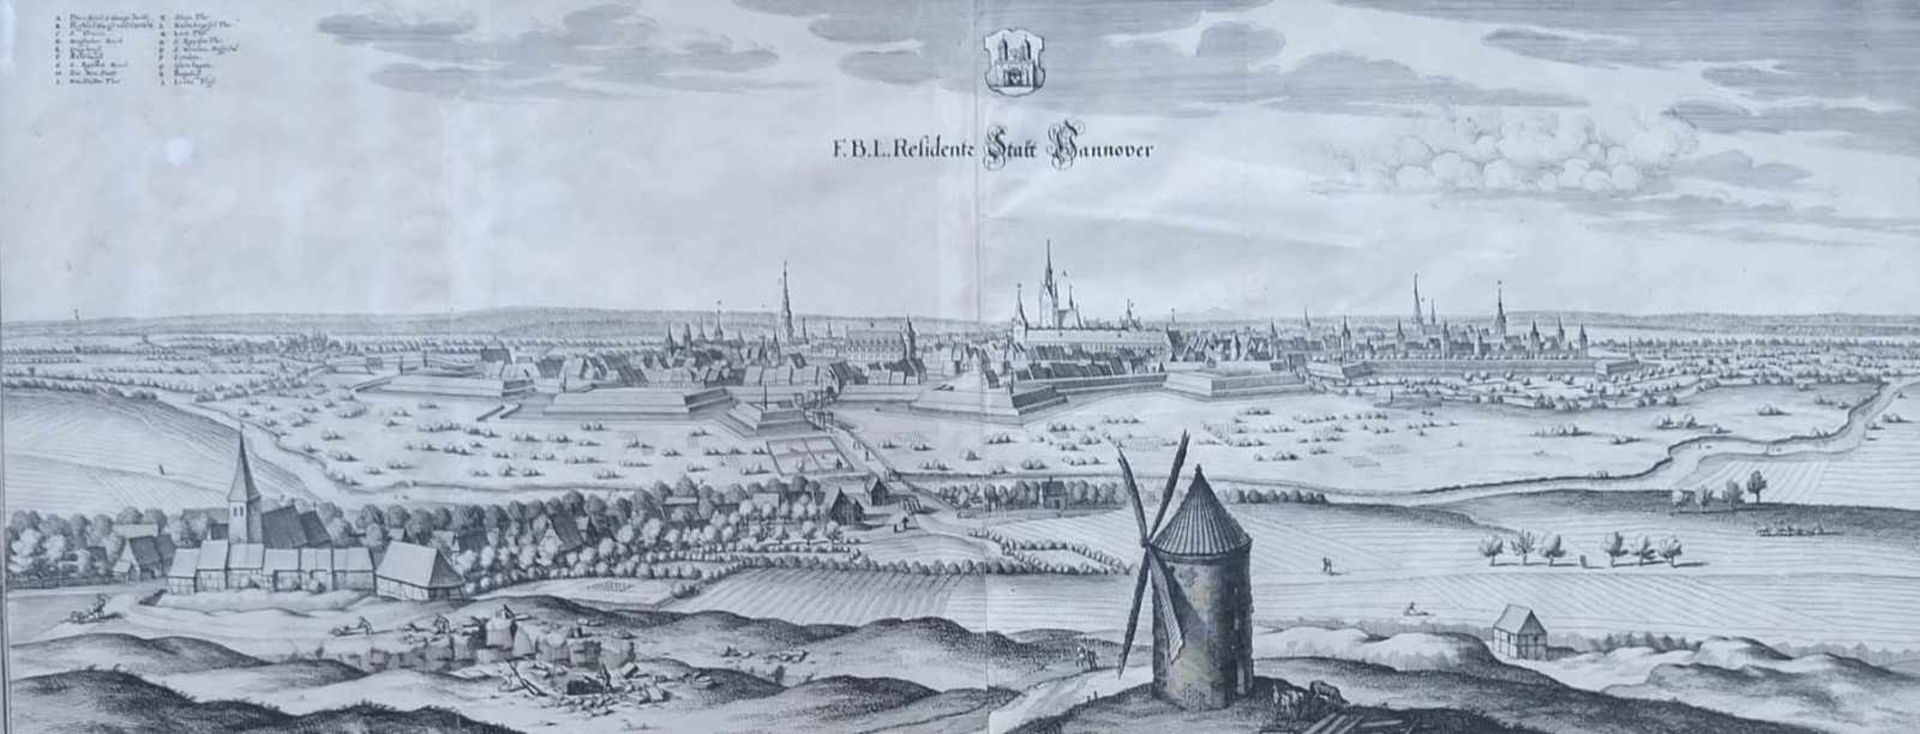 MERIAN, Casper (*1627 Frankfurt am Main †1686 Westfriesland) nach C. Buno, Kupferstich, "F.B.L.